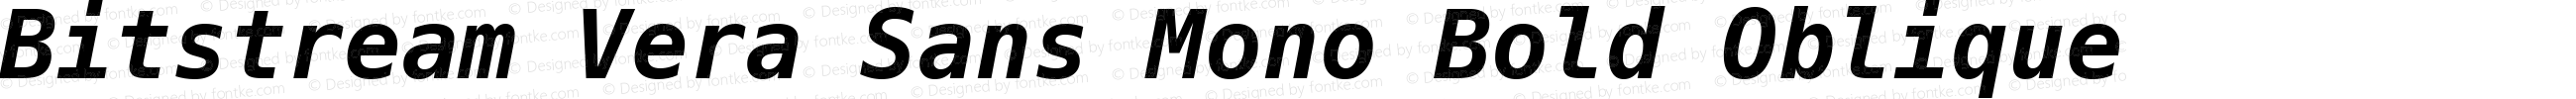 Bitstream Vera Sans Mono Bold Oblique Nerd Font Plus Font Awesome Plus Octicons Mono Windows Compatible